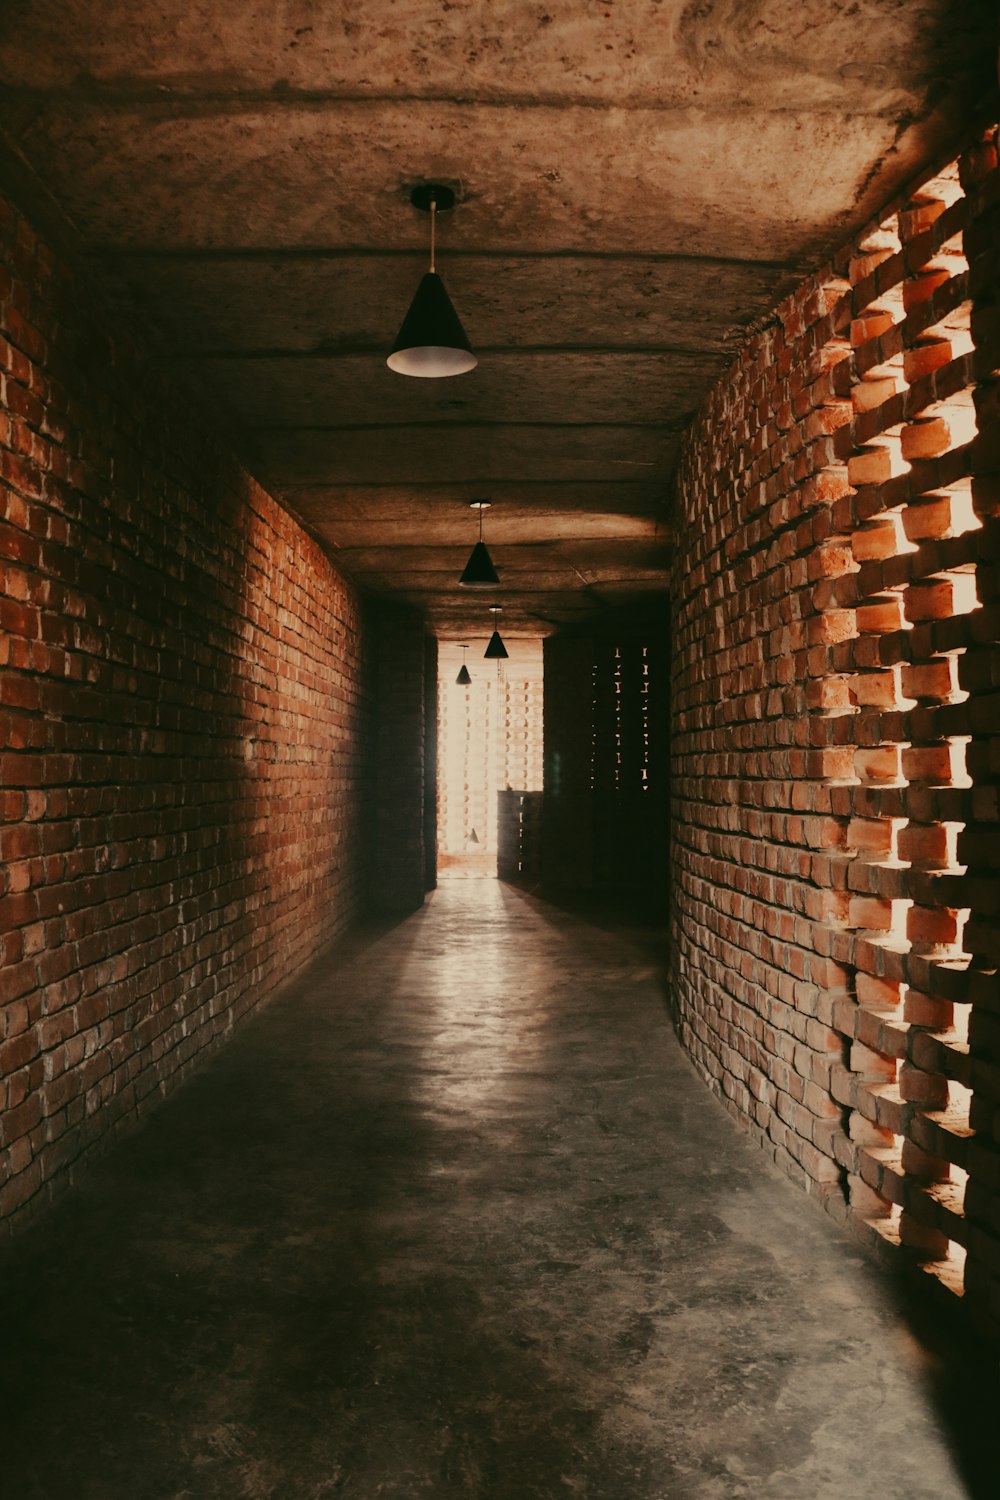 a hallway with brick walls